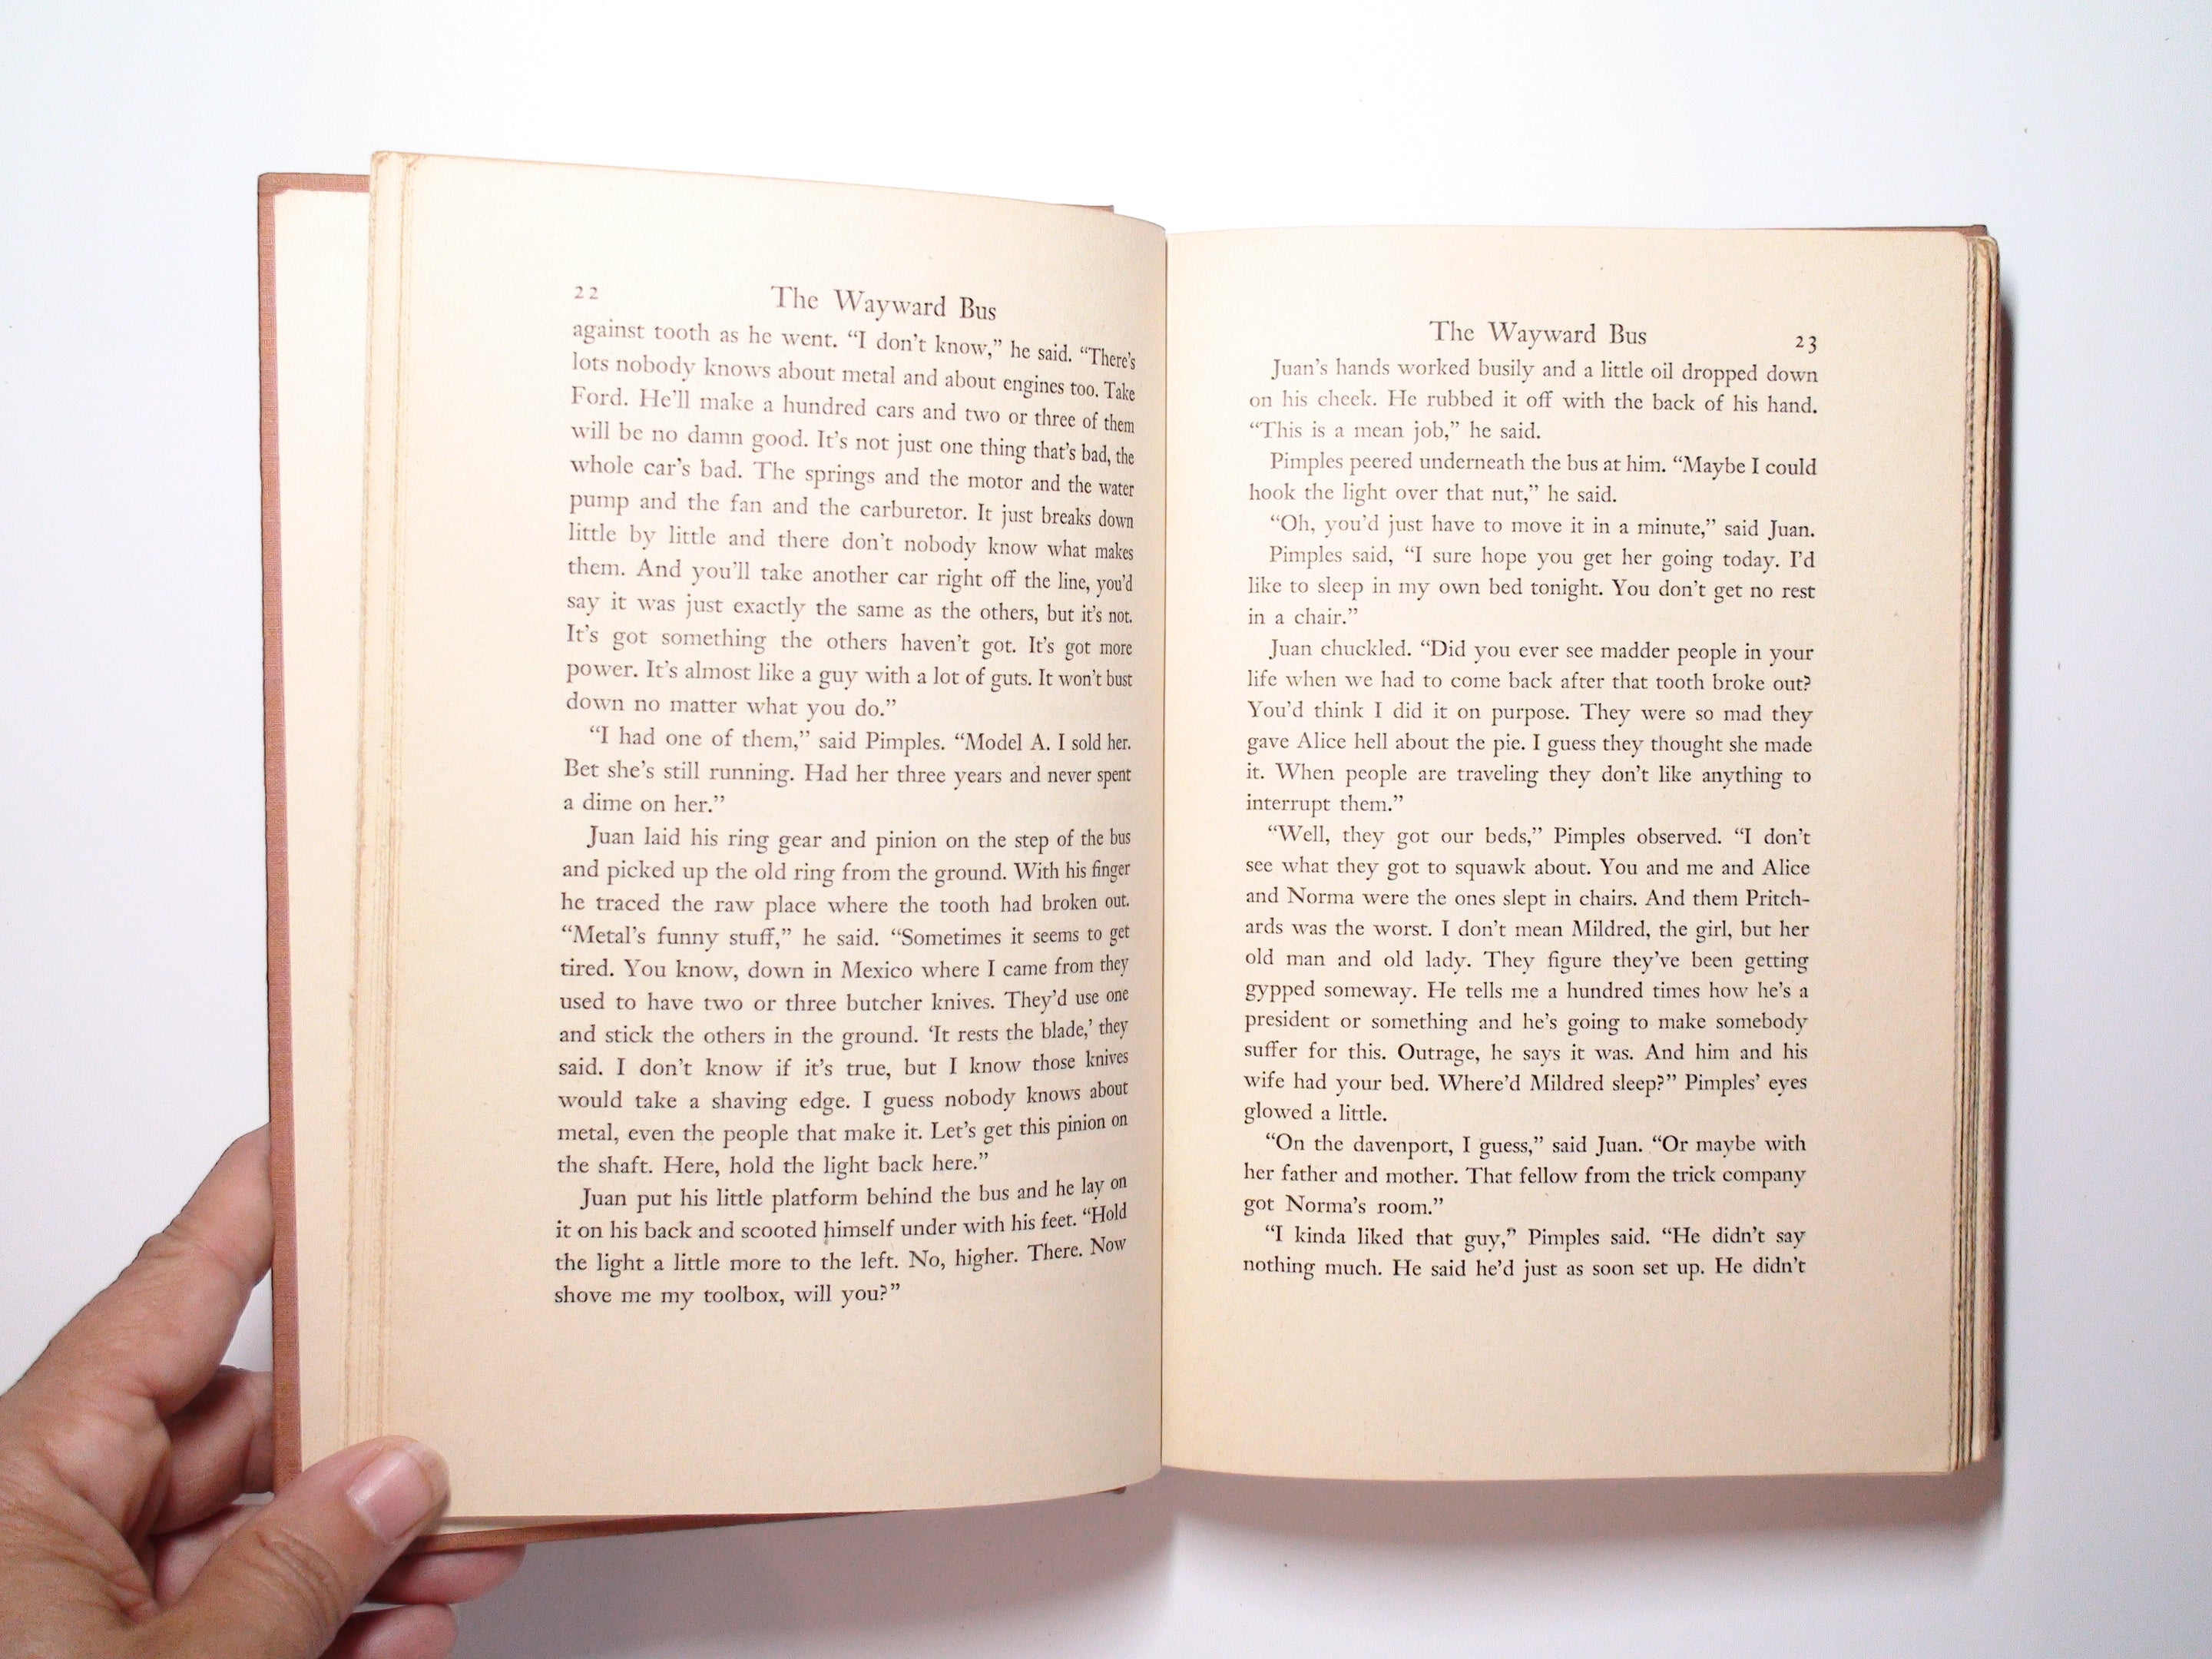 The Wayward Bus, by John Steinbeck, Viking Press, Book Club Ed, No Dust Jacket, 1947